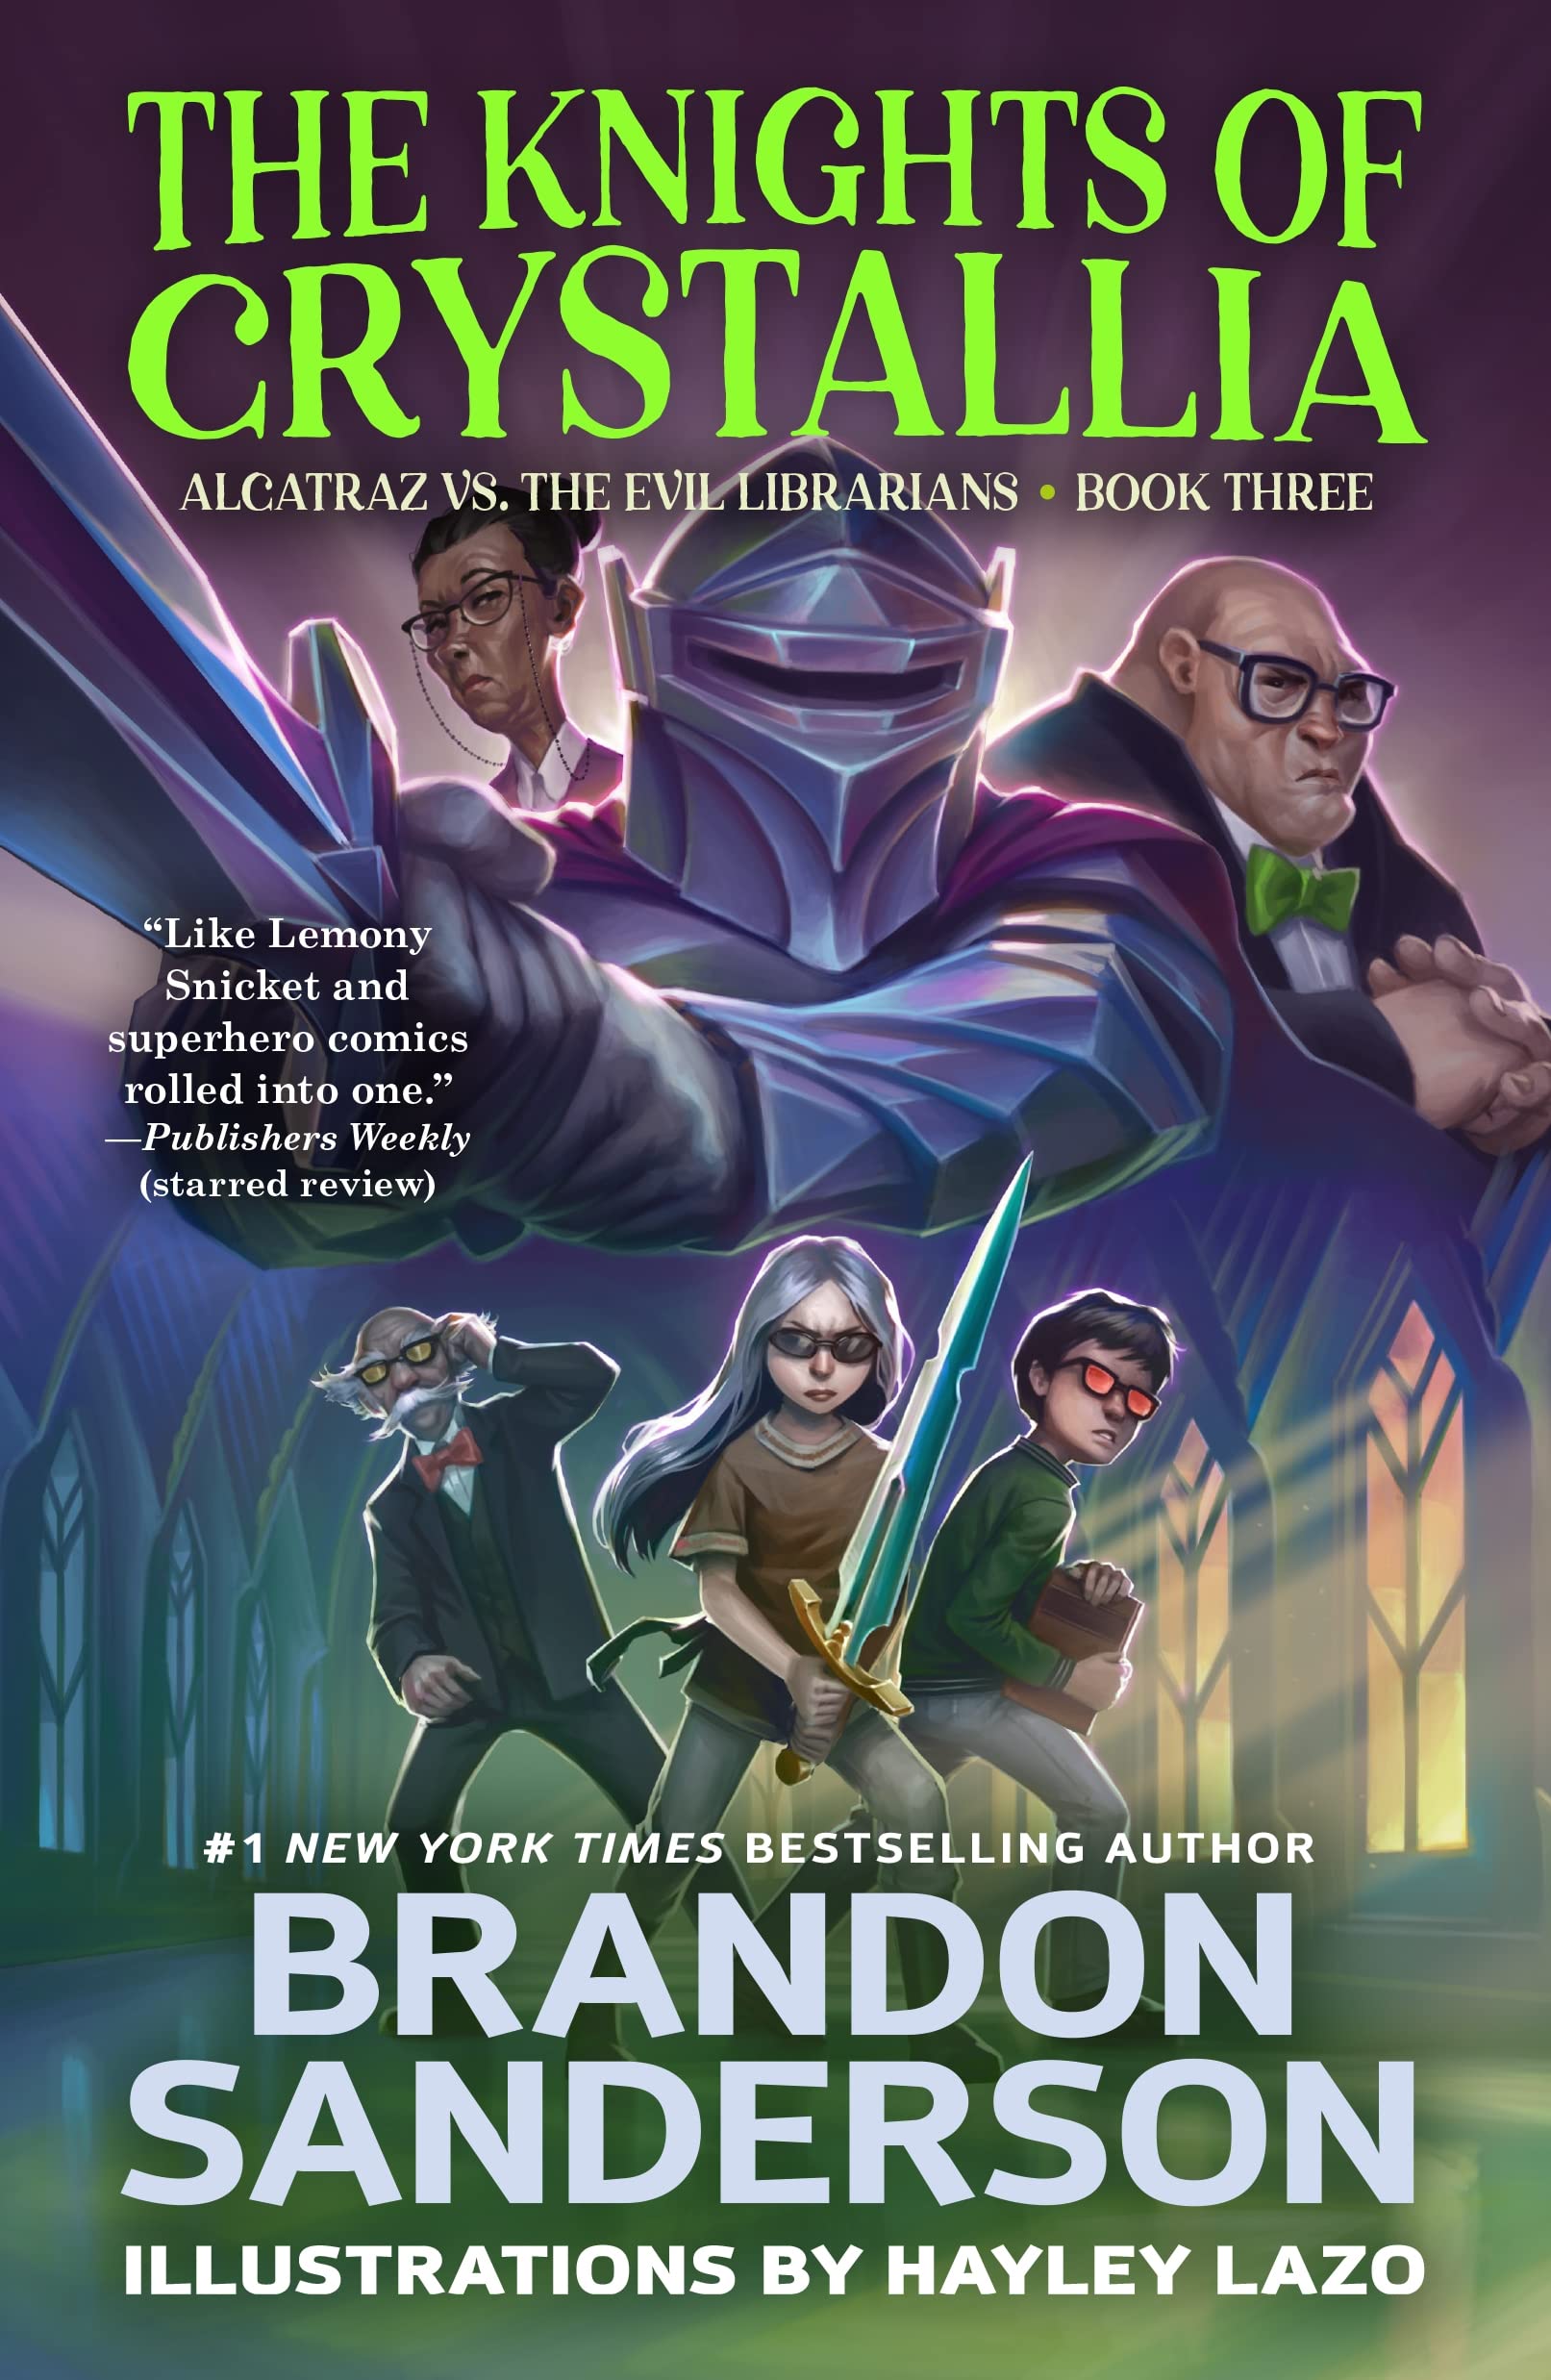 The Knights of Crystallia - Alcatraz vs the Evil Librarians | Brandon Sanderson